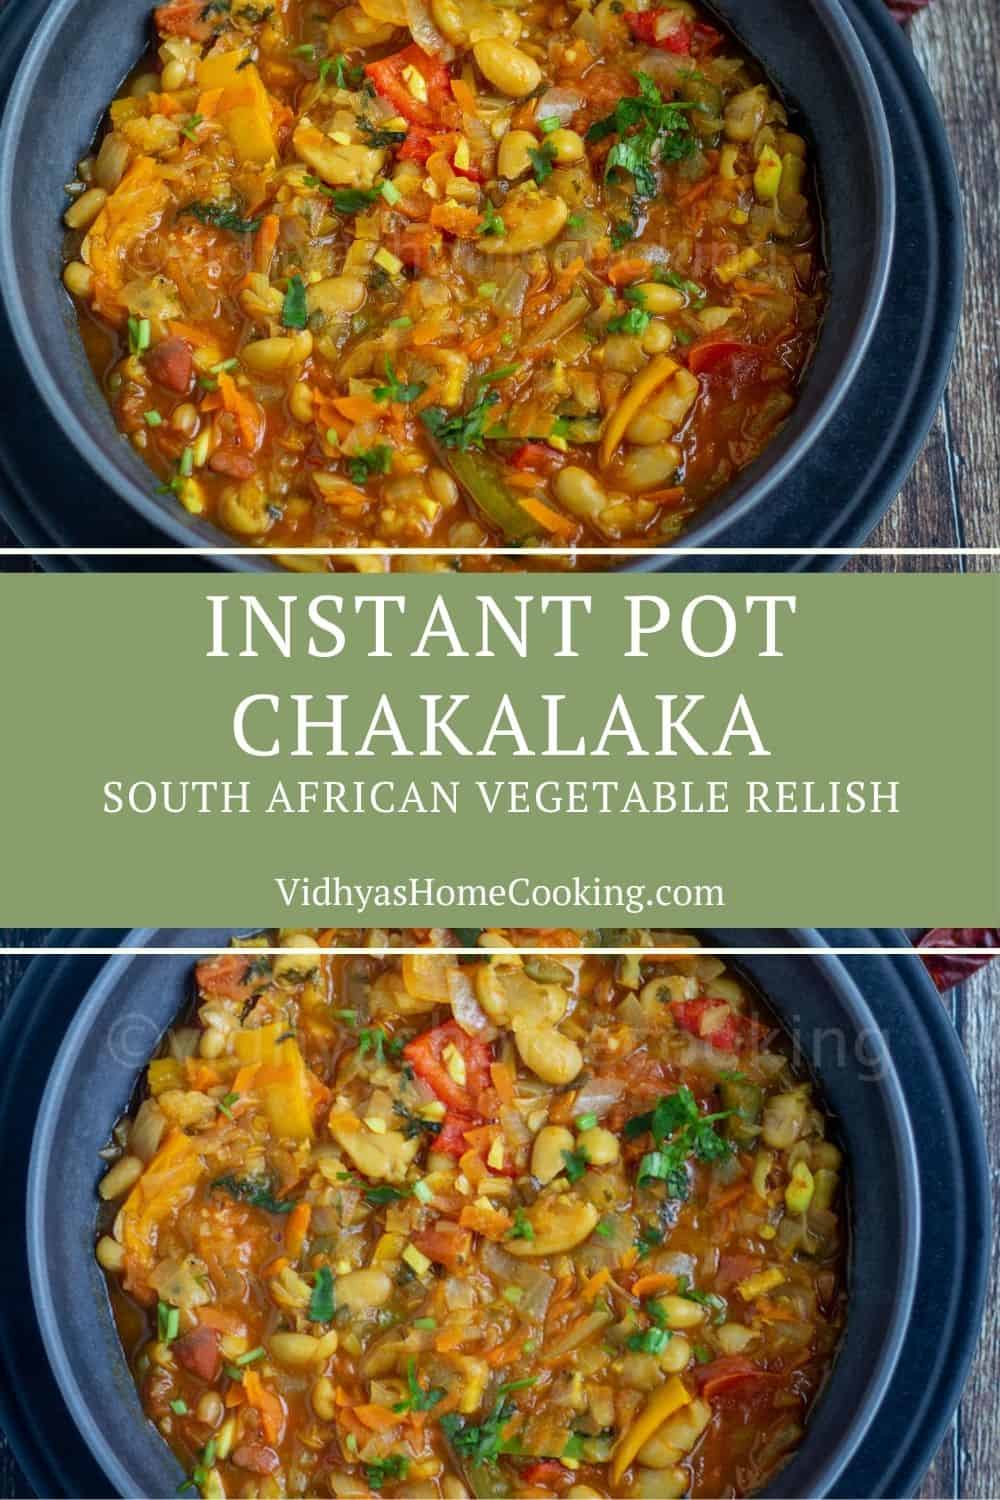 Chakalaka (South African Vegetable Relish) - Vidhya’s Home Cooking